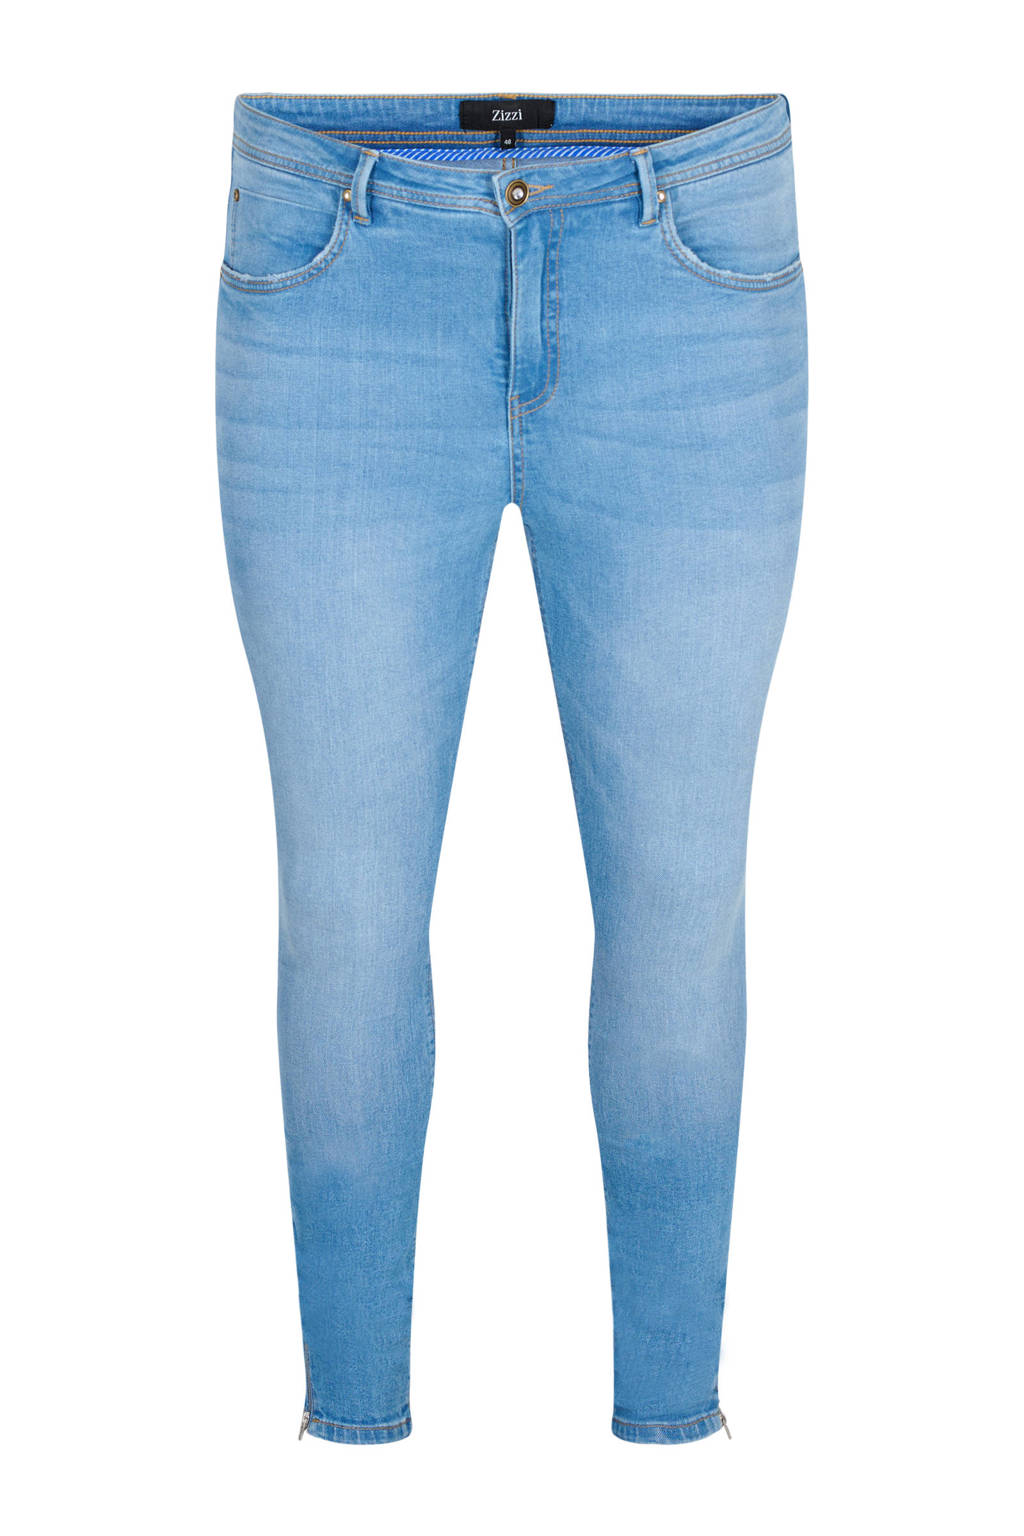 Zizzi high waist cropped skinny jeans JLAISE AMY light denim